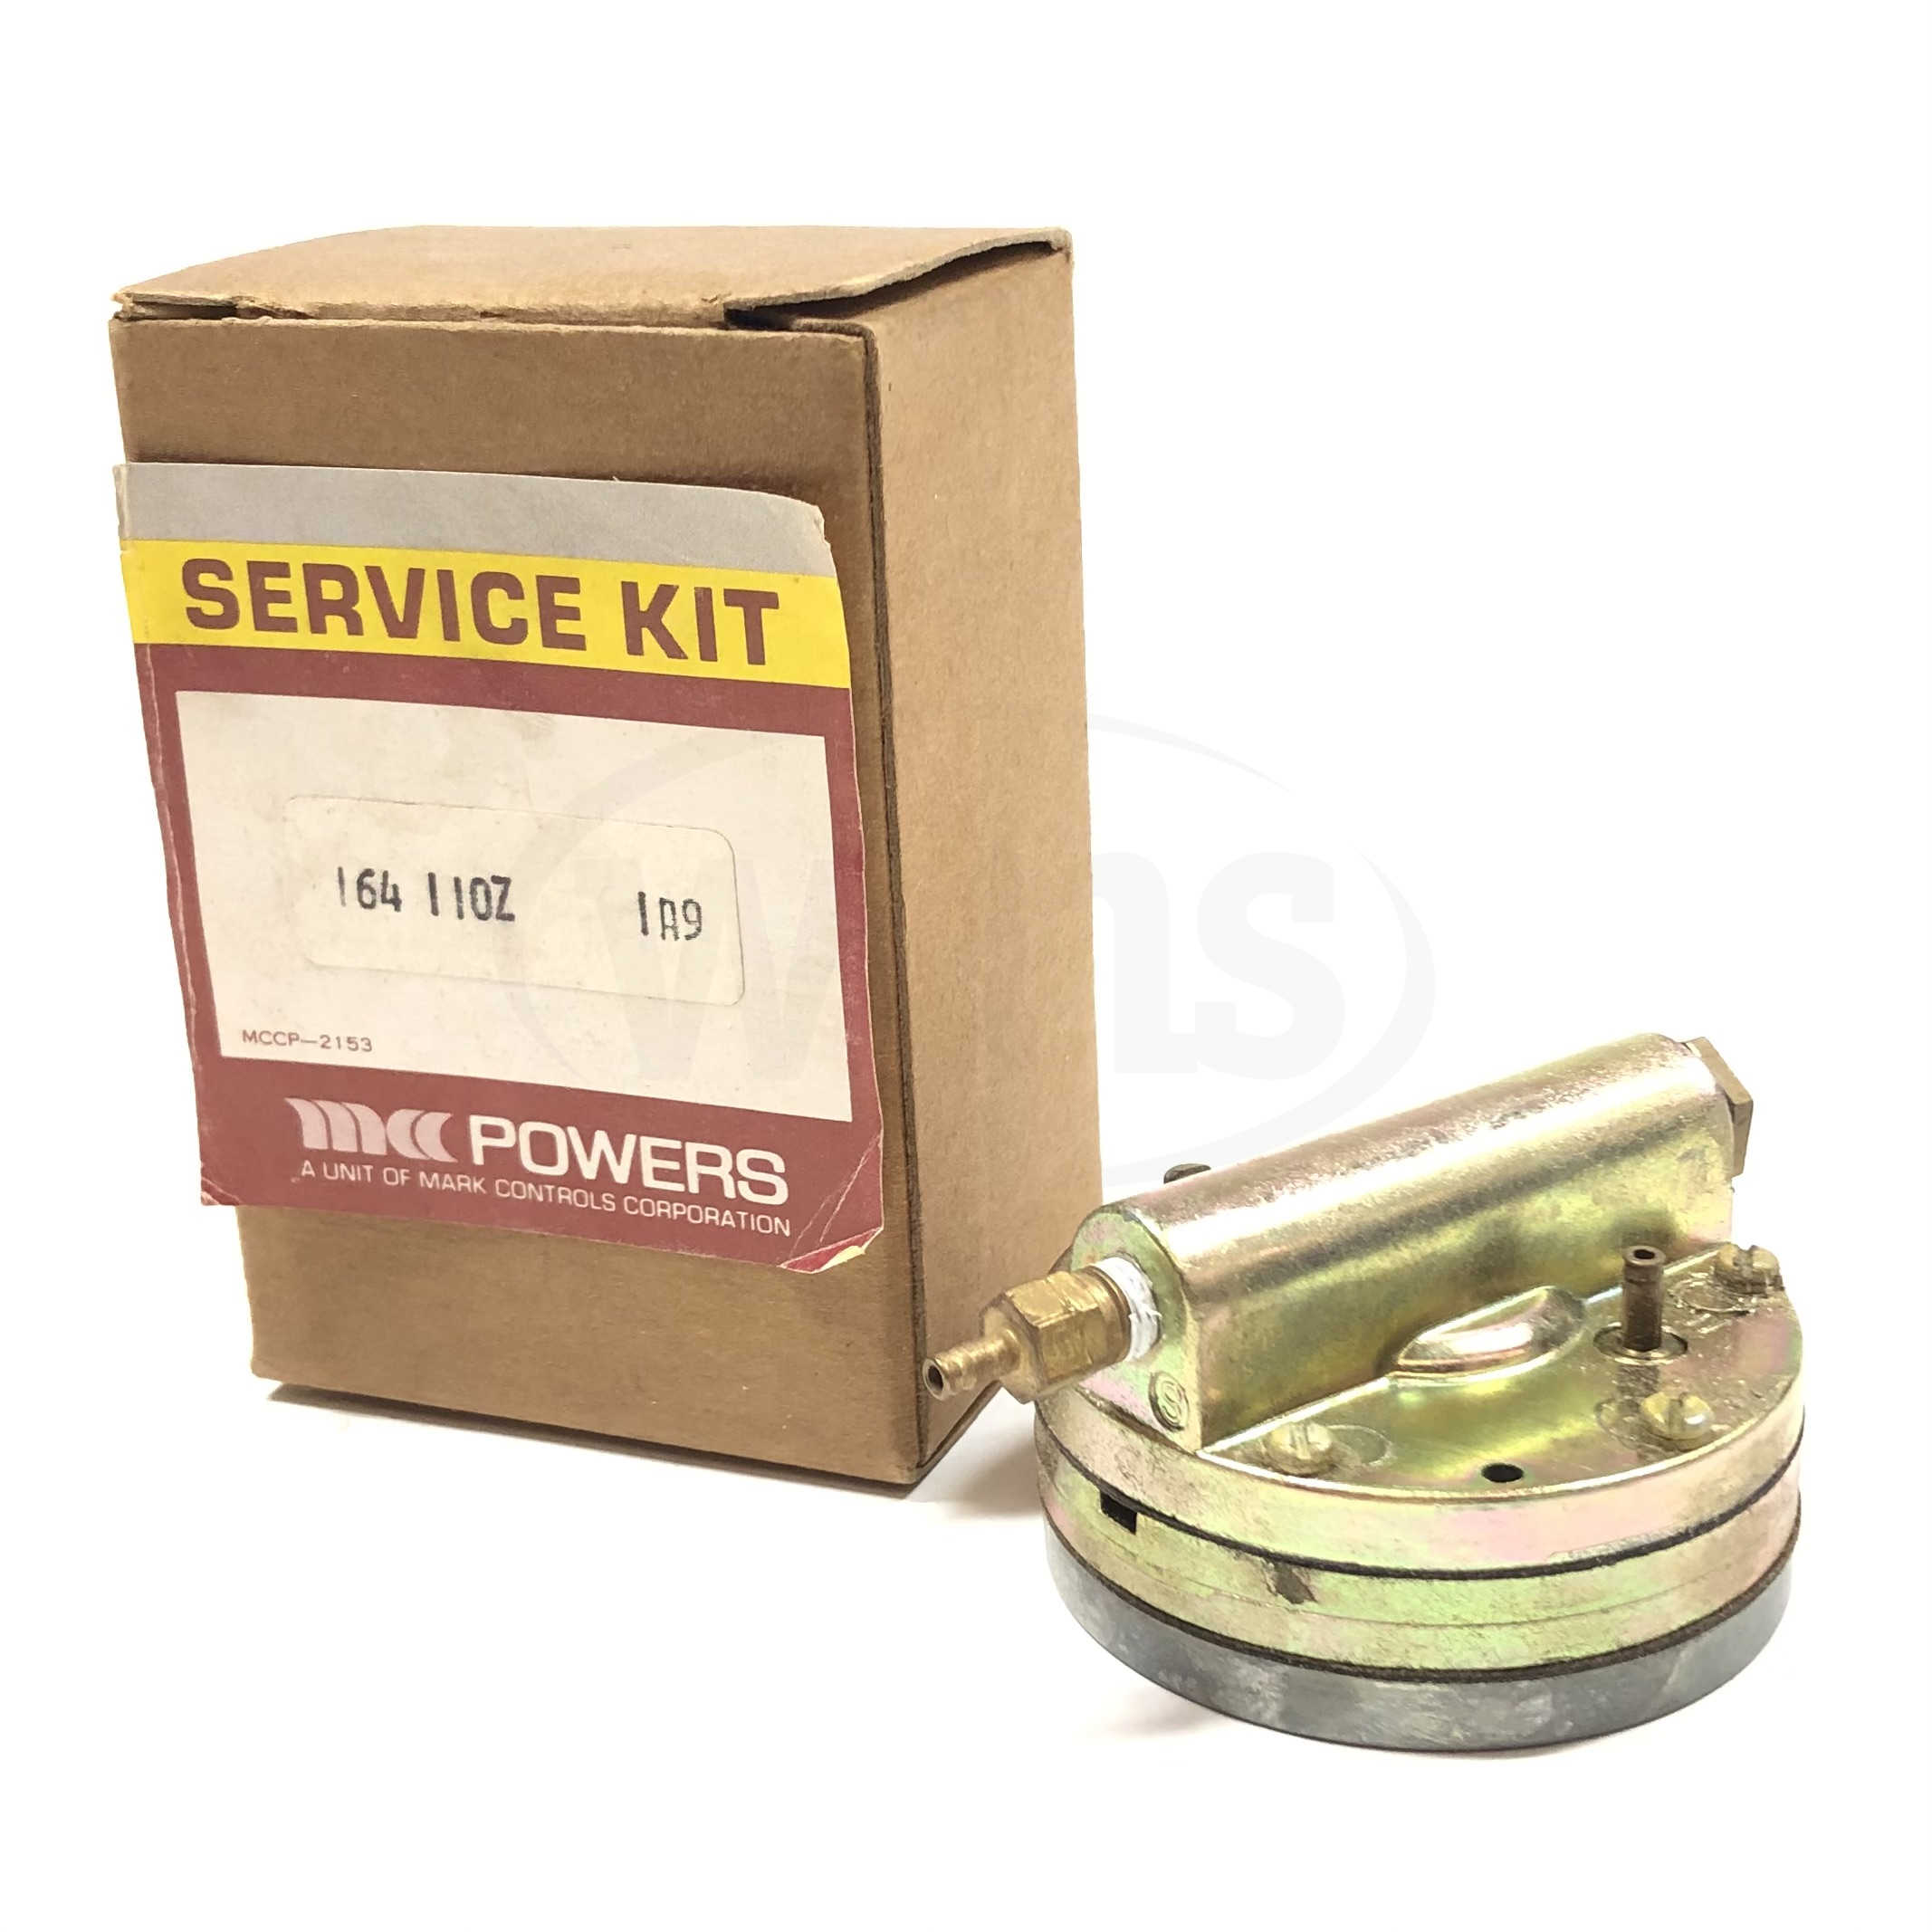 164-110Z Powers Service Kit 1